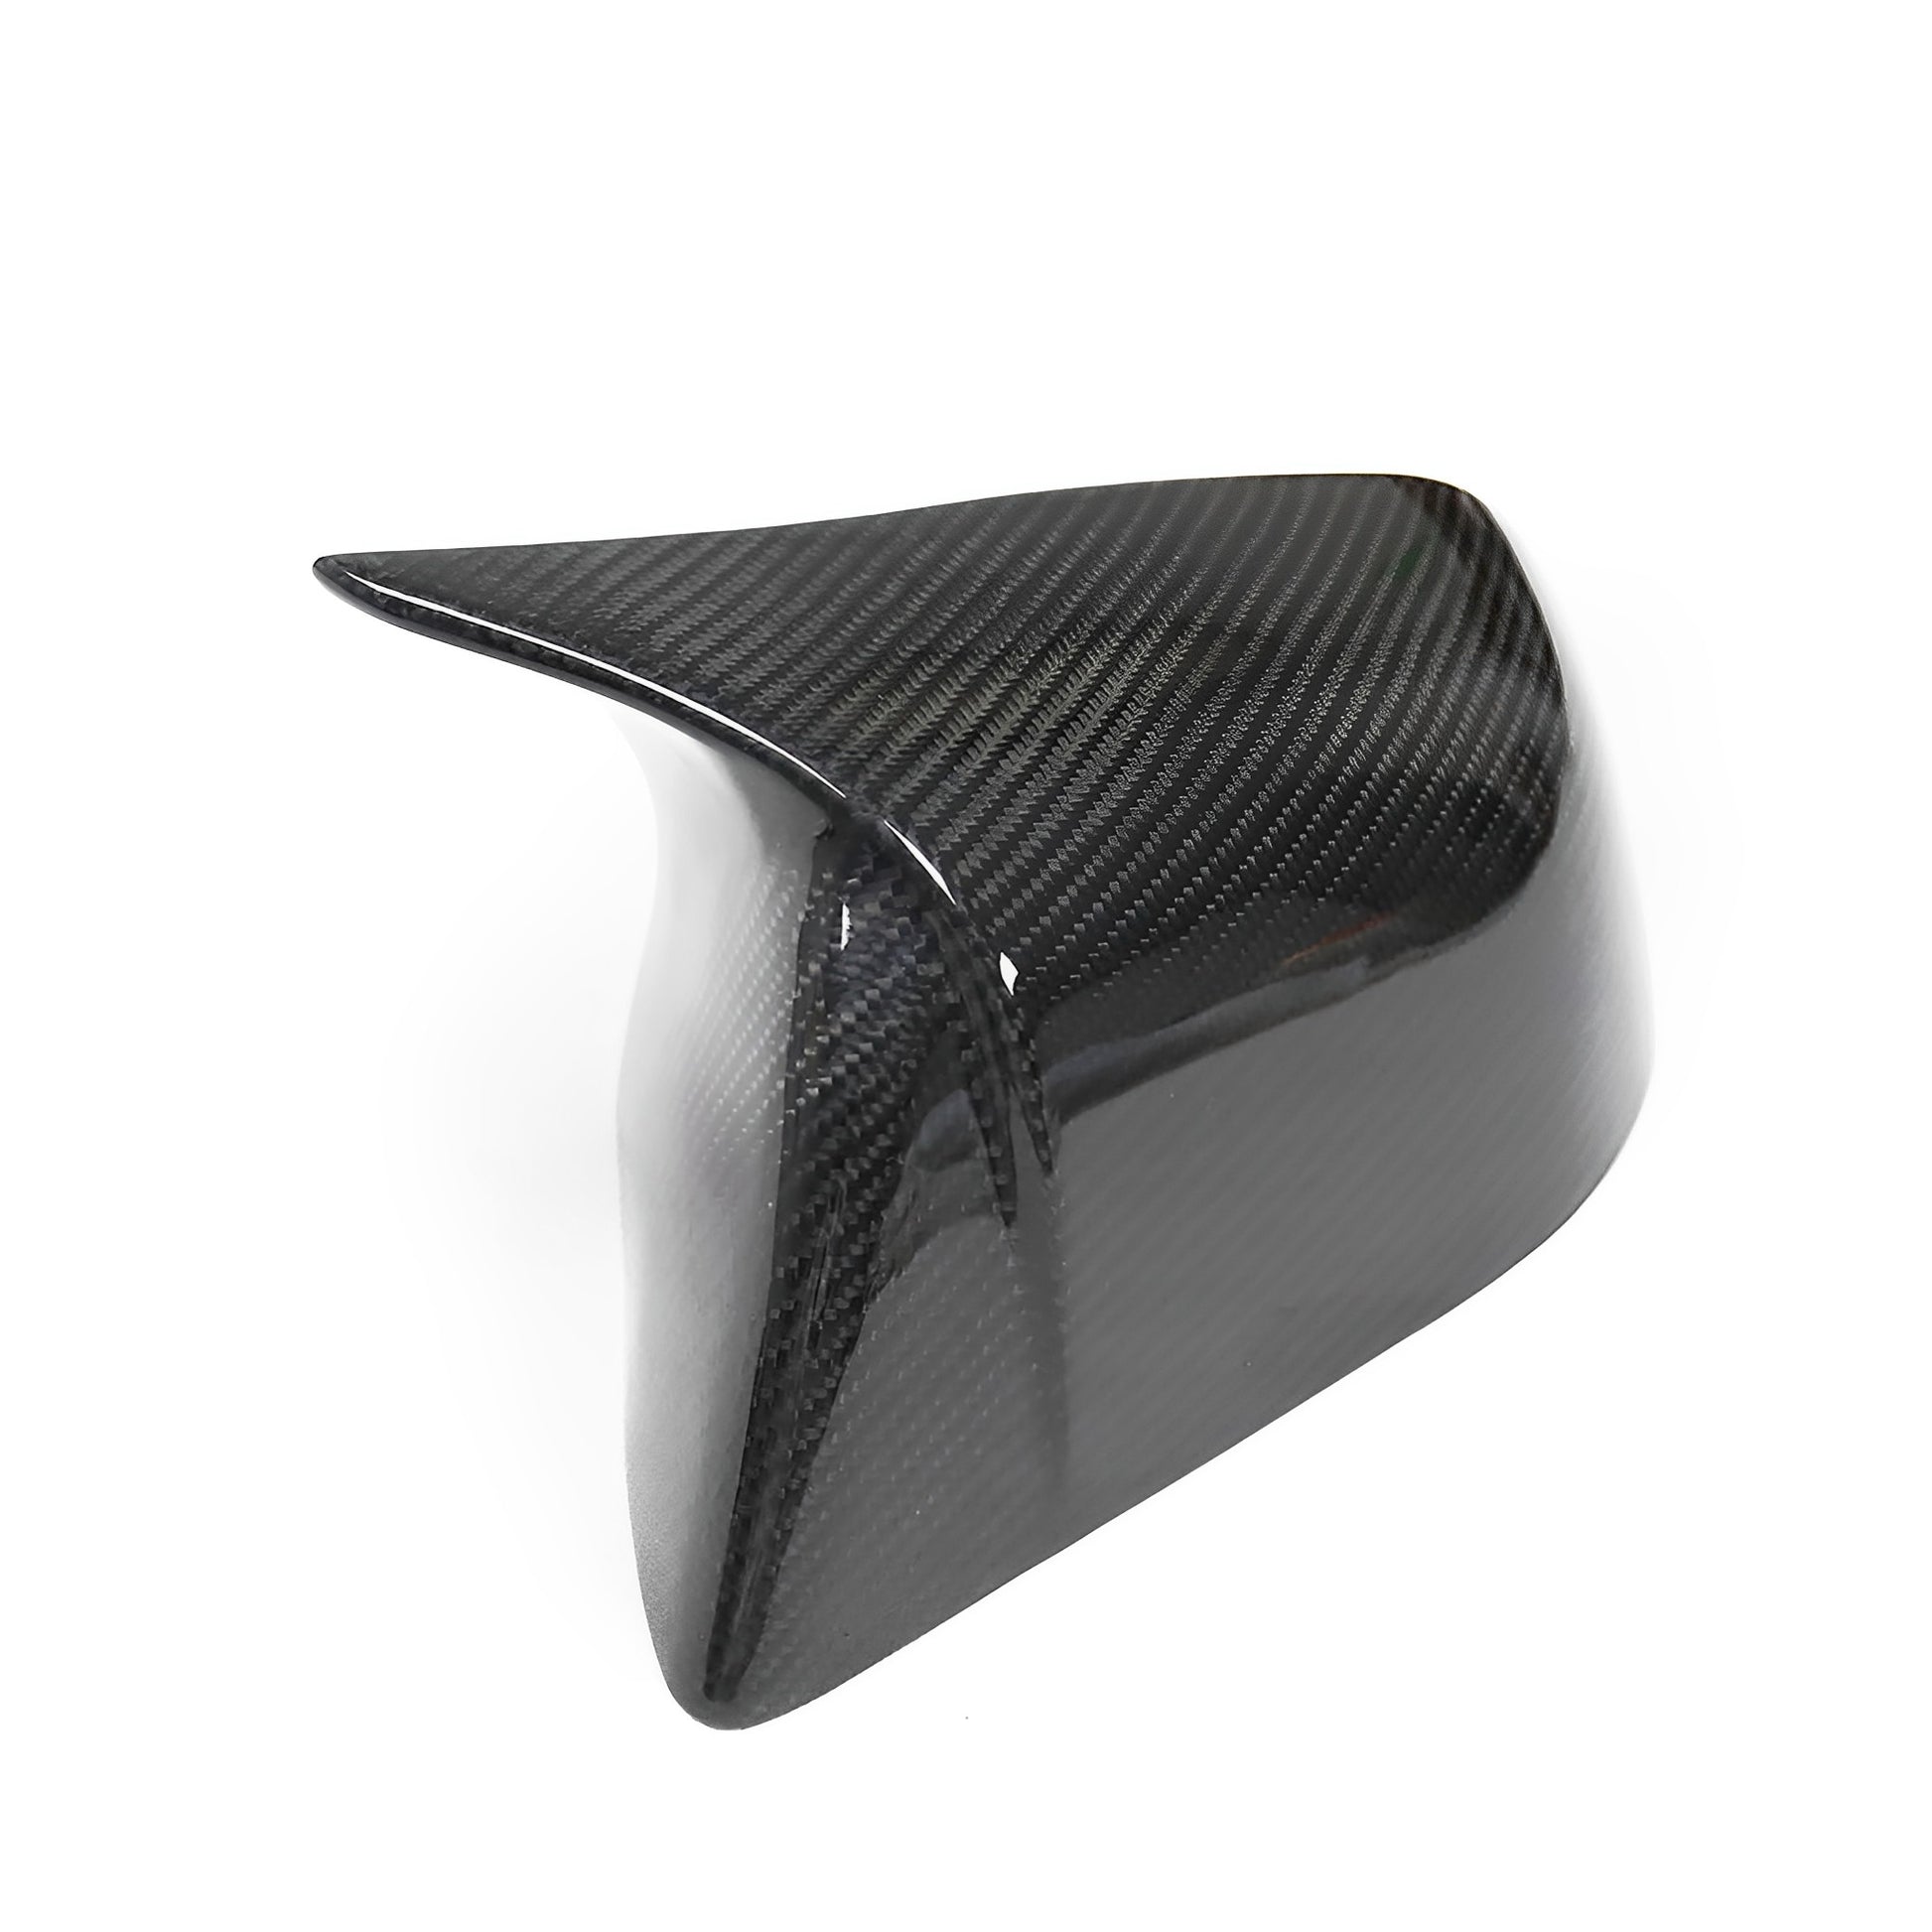 Rear Carbon Fiber Mirror Caps For Tesla Model 3 & Y by Yeslak